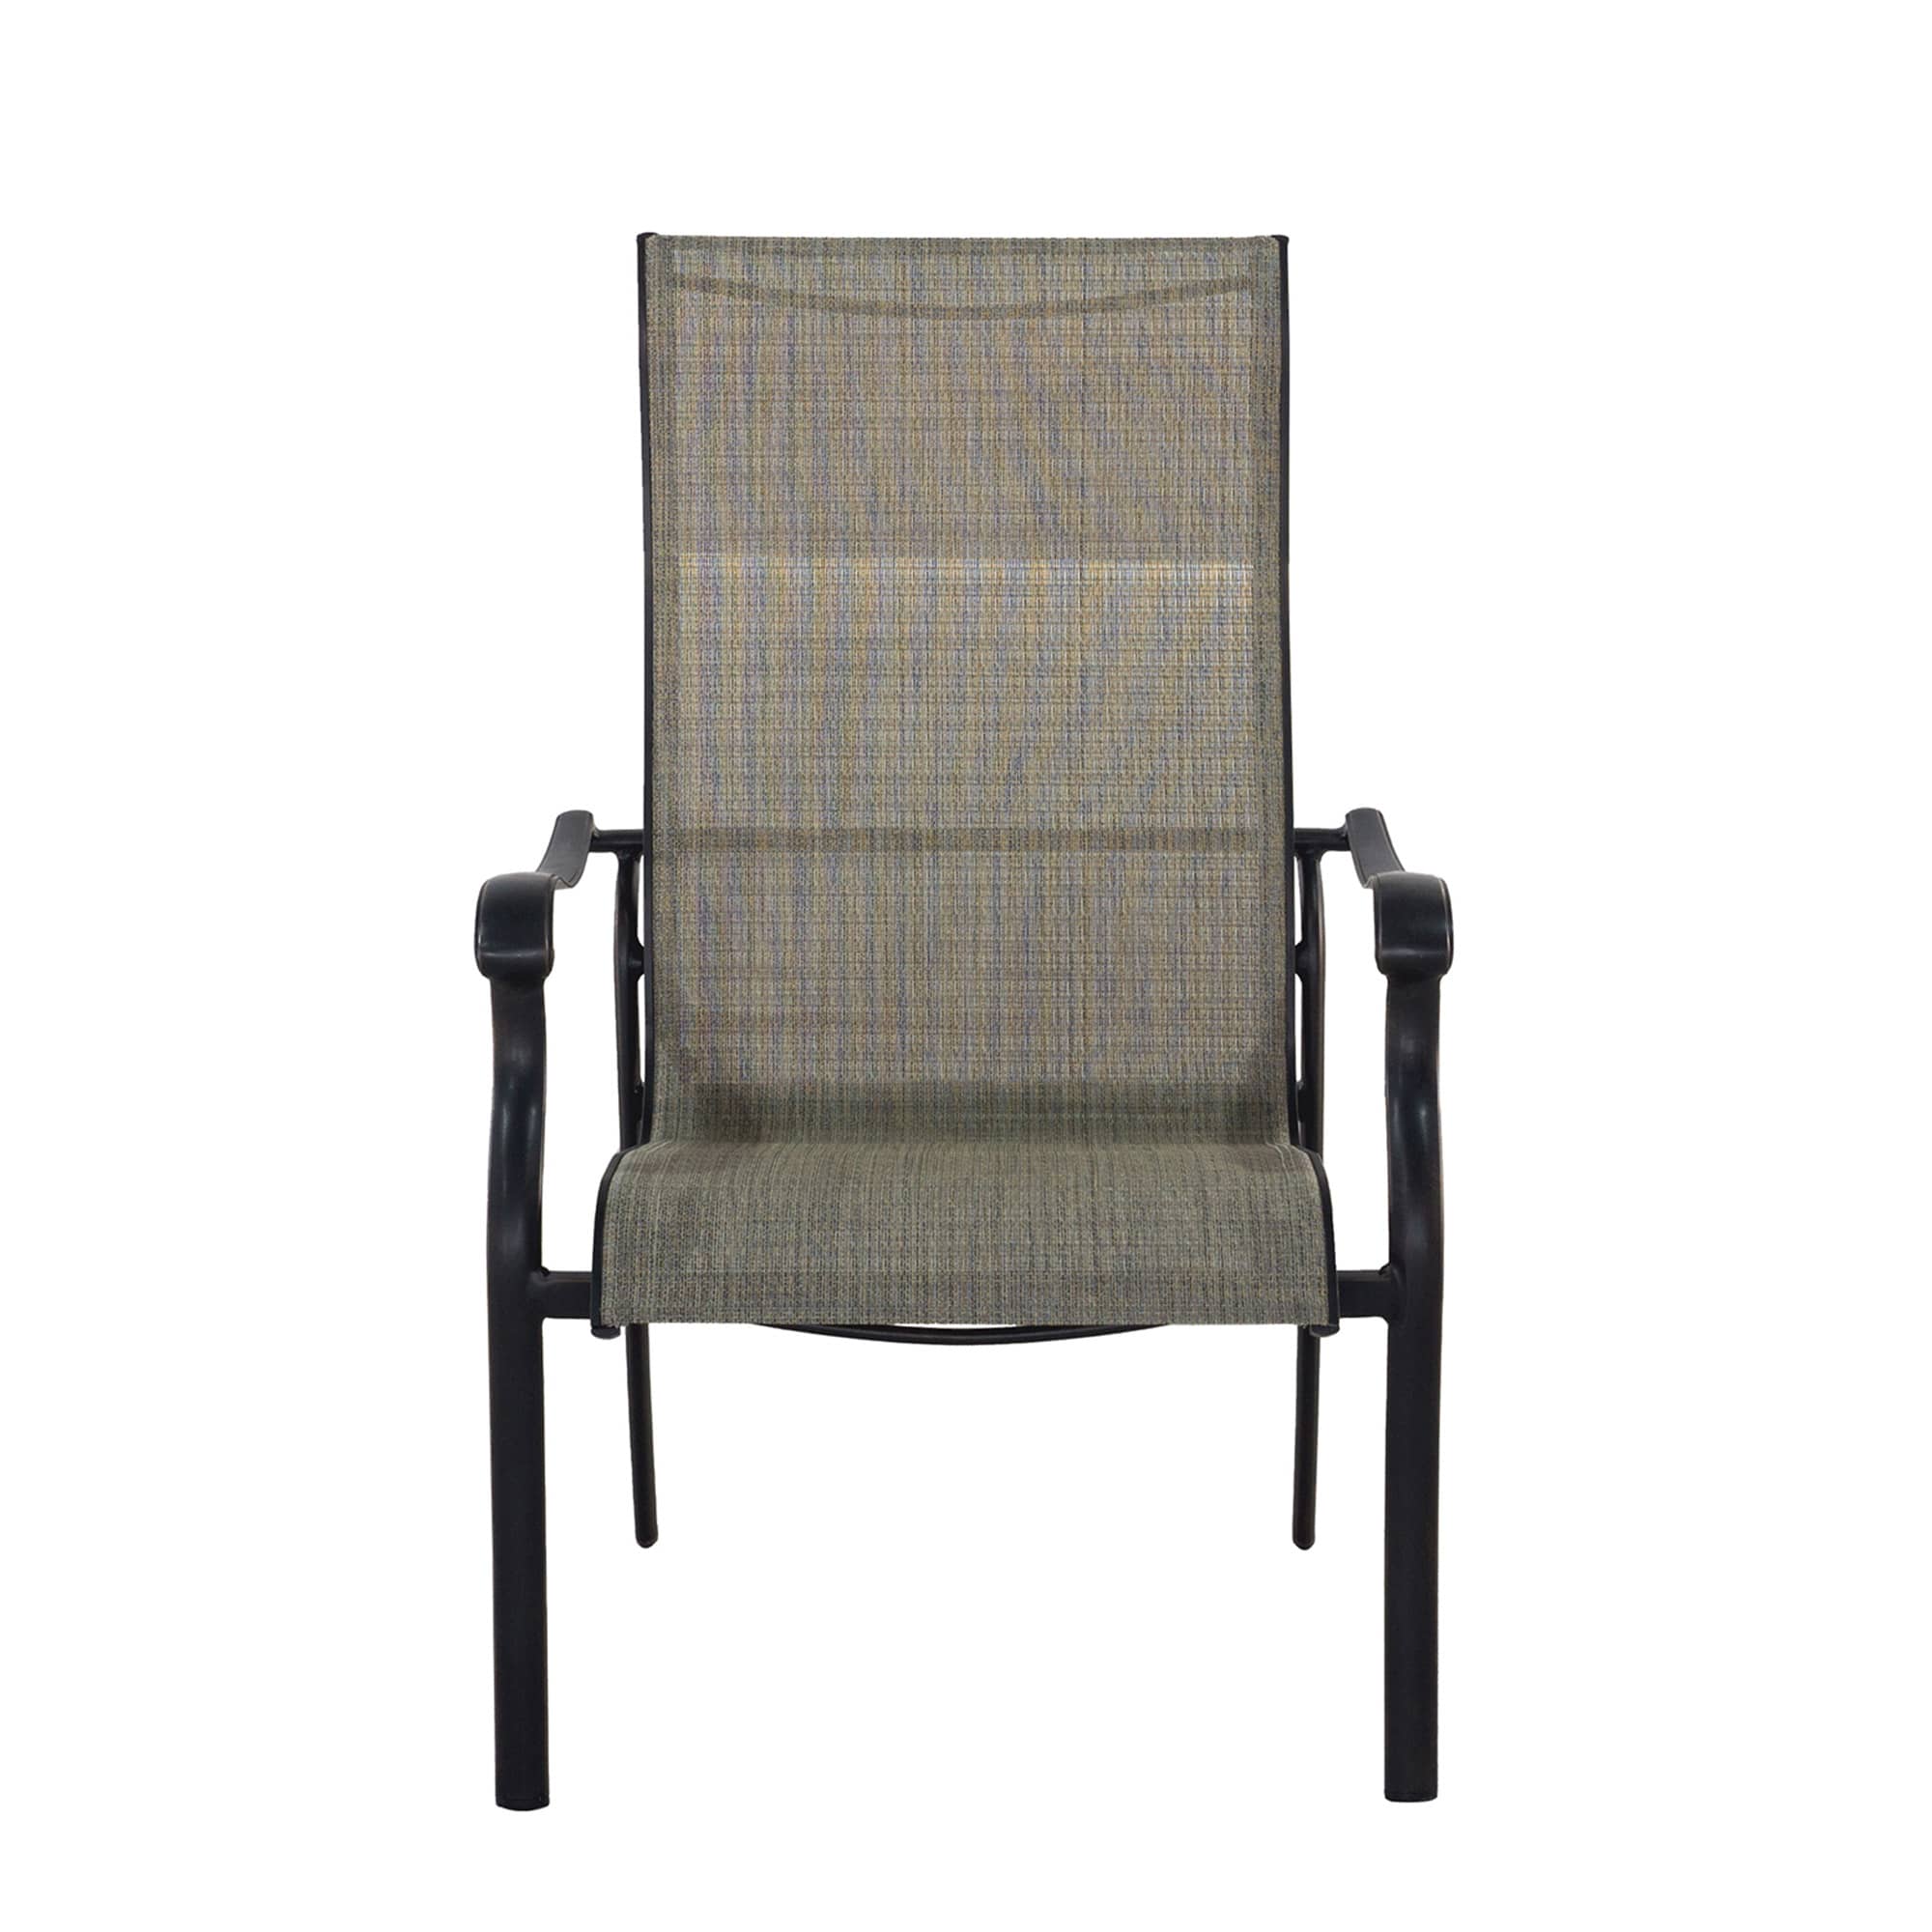 CASAINC 4 Piece Textilene Fabric Cast Aluminum Frame Dining Chair